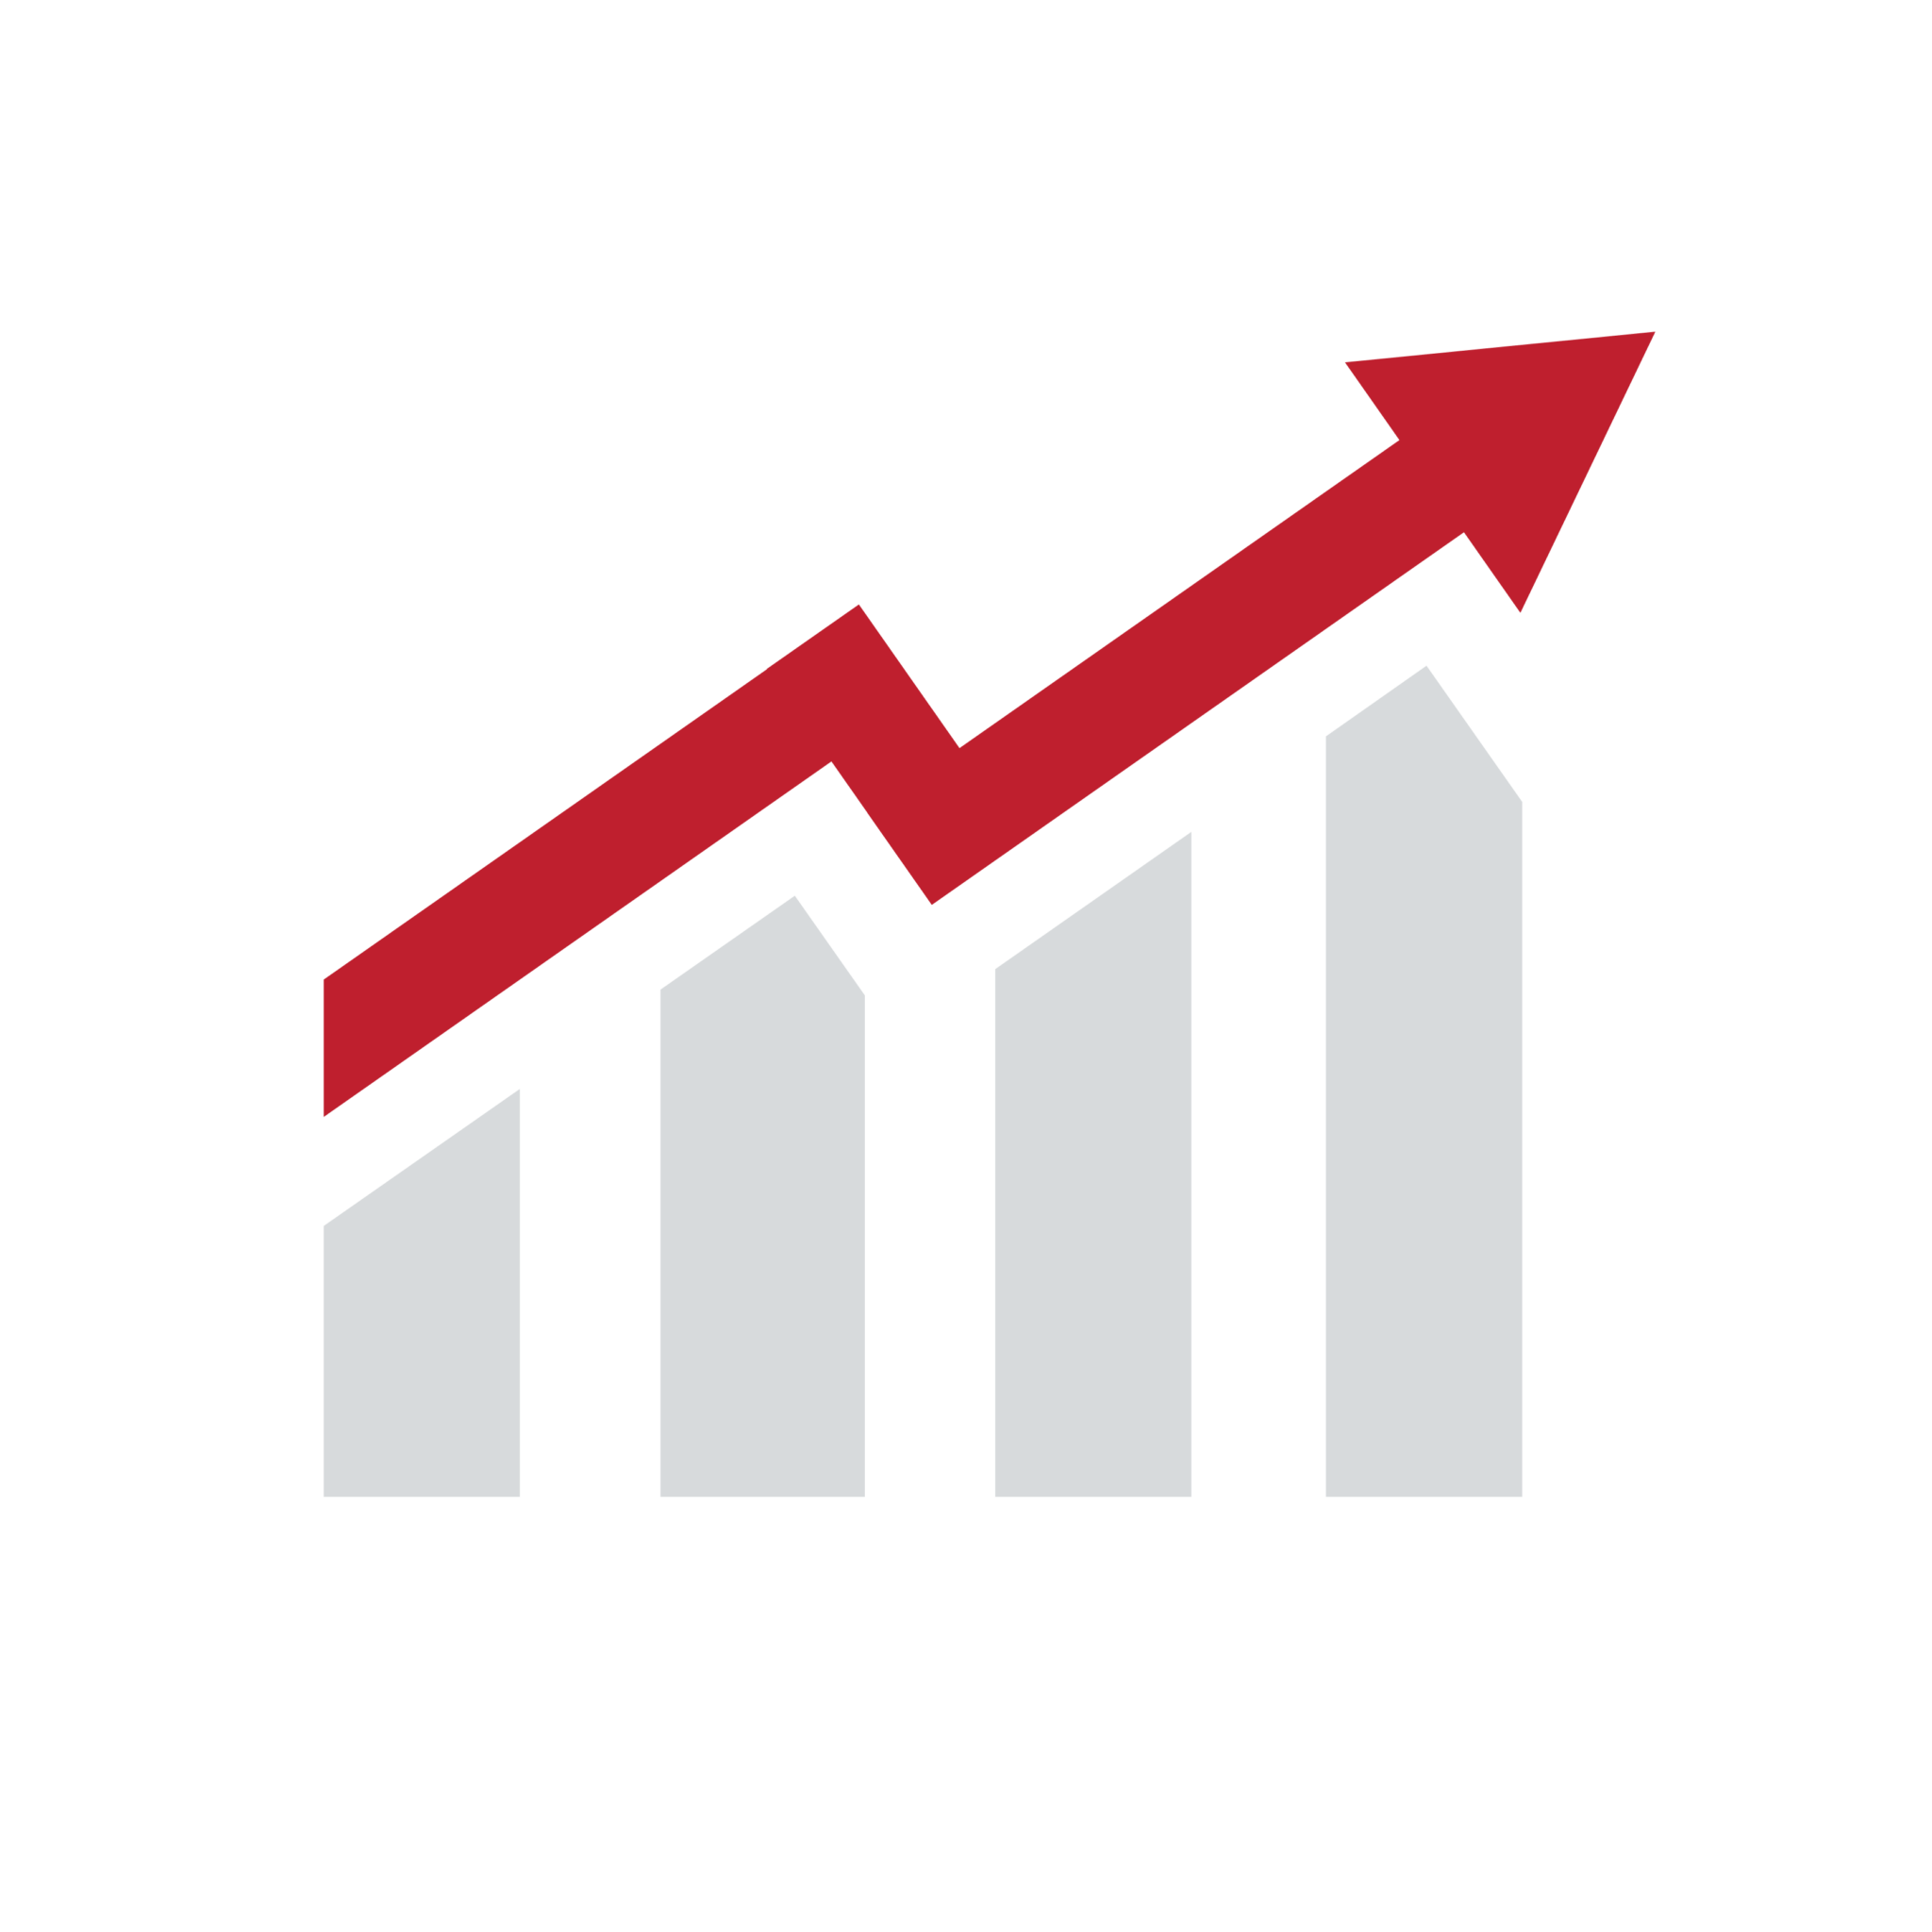 Increase in cookieless revenue percentage